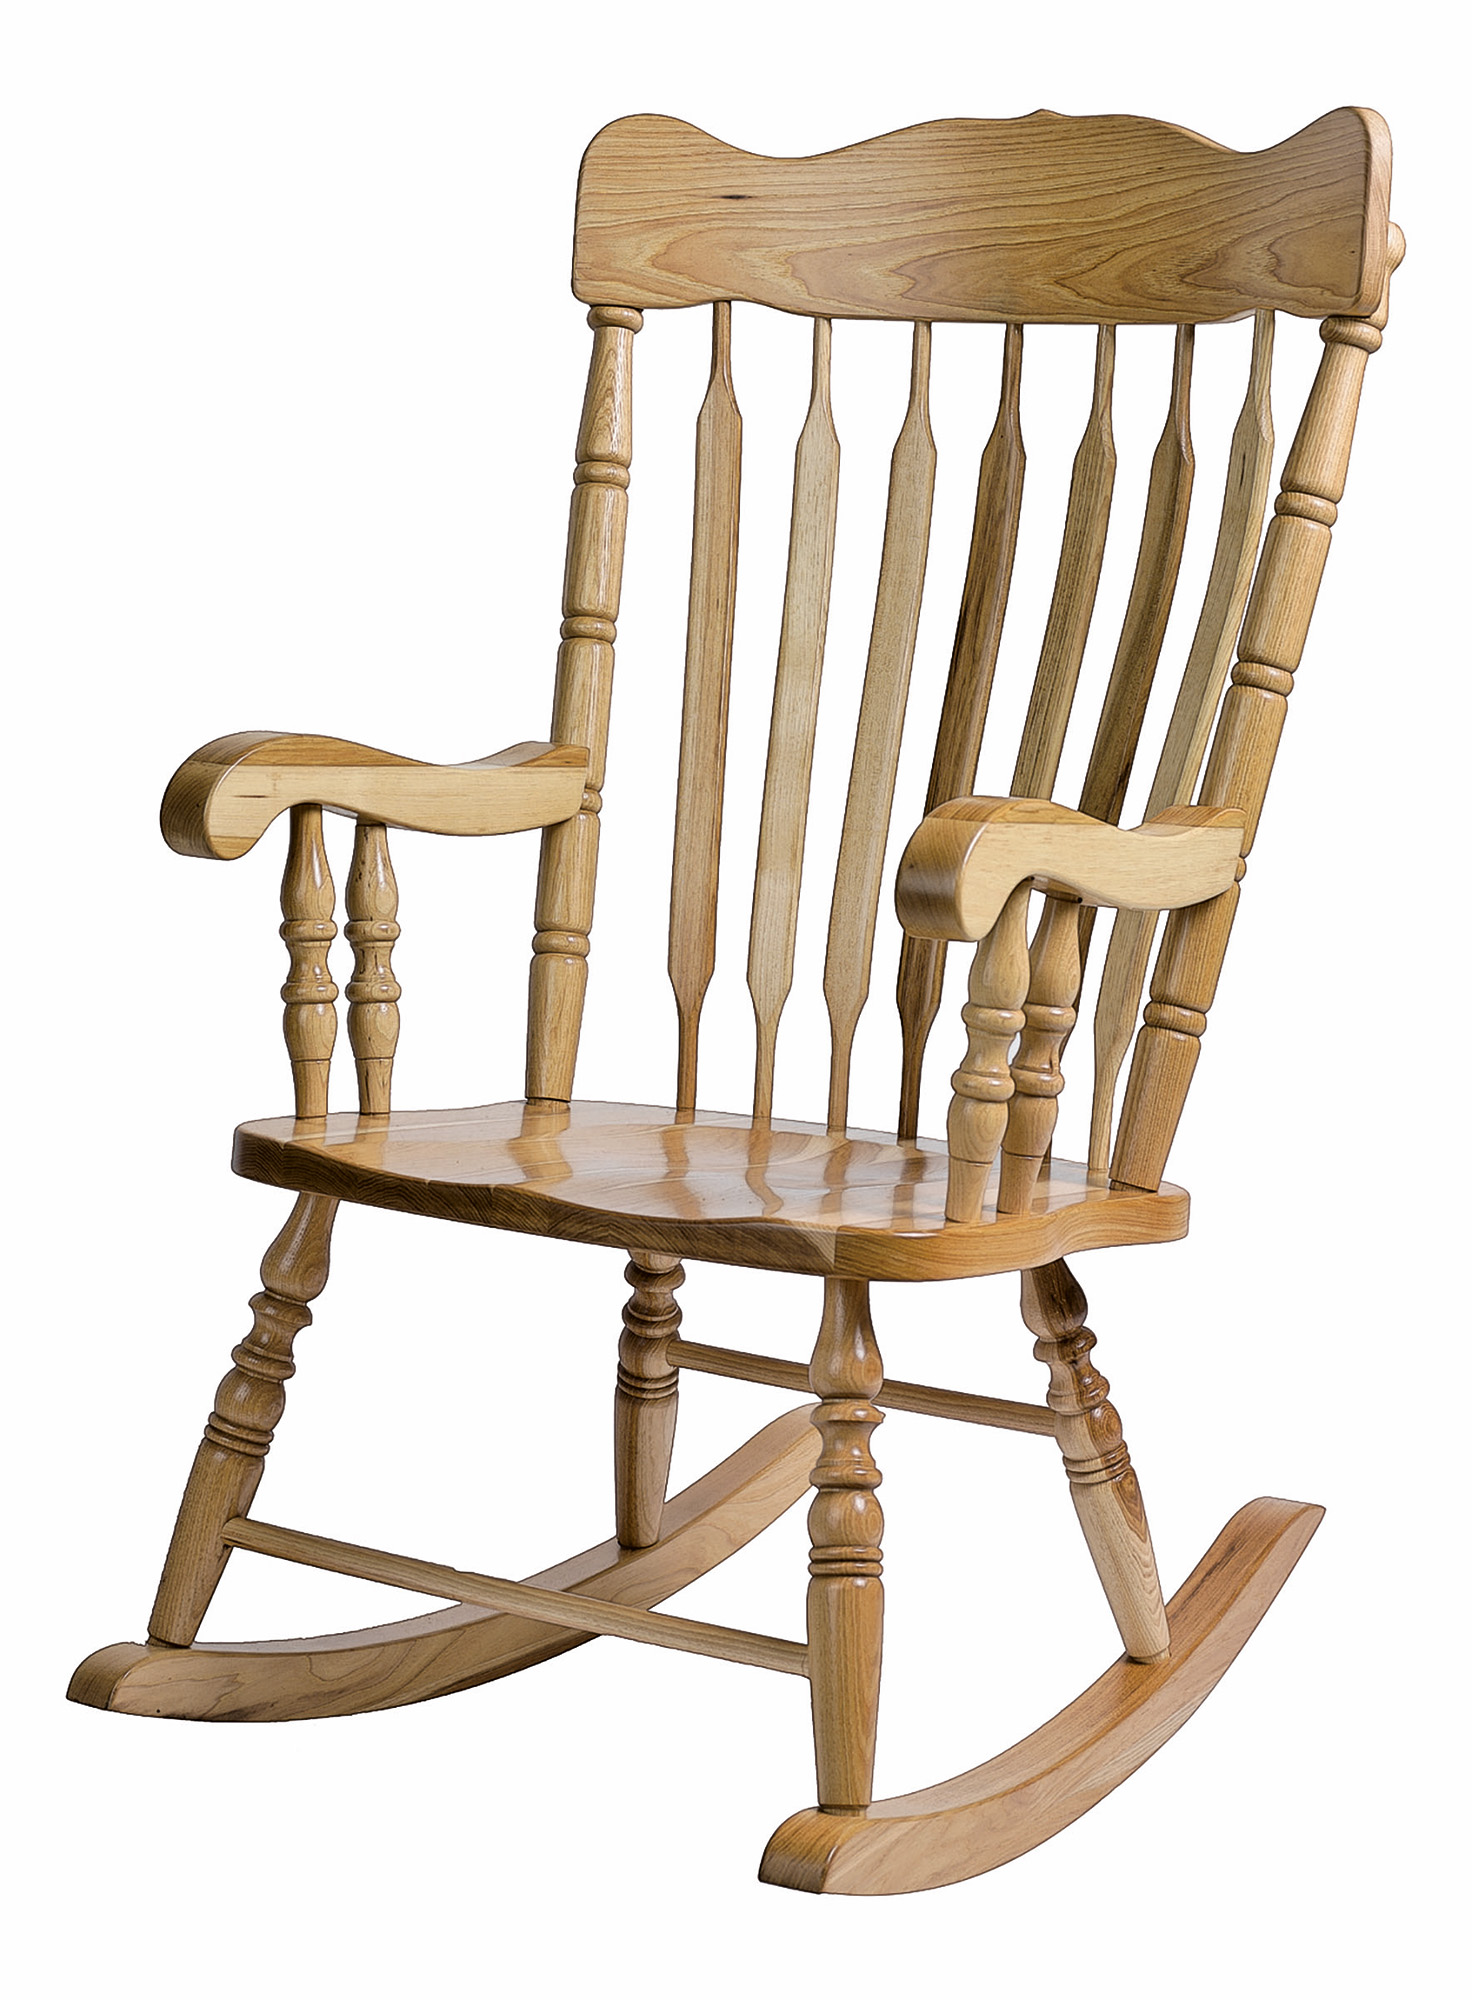 Horseshoe Bend Chair